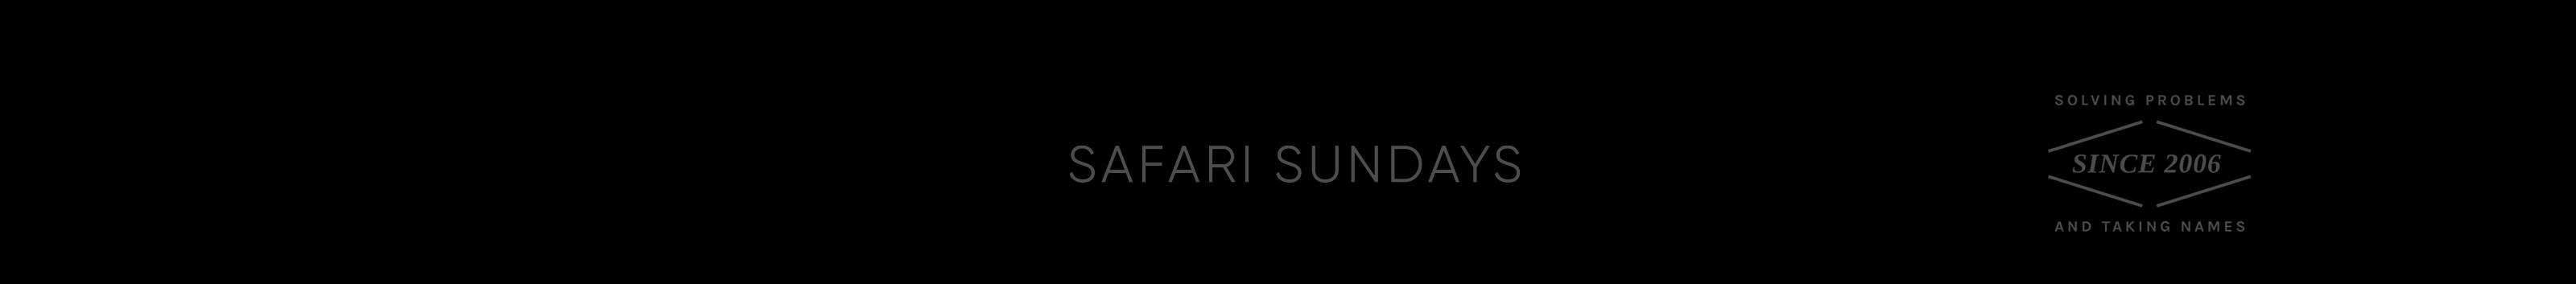 Safari Sundays's profile banner